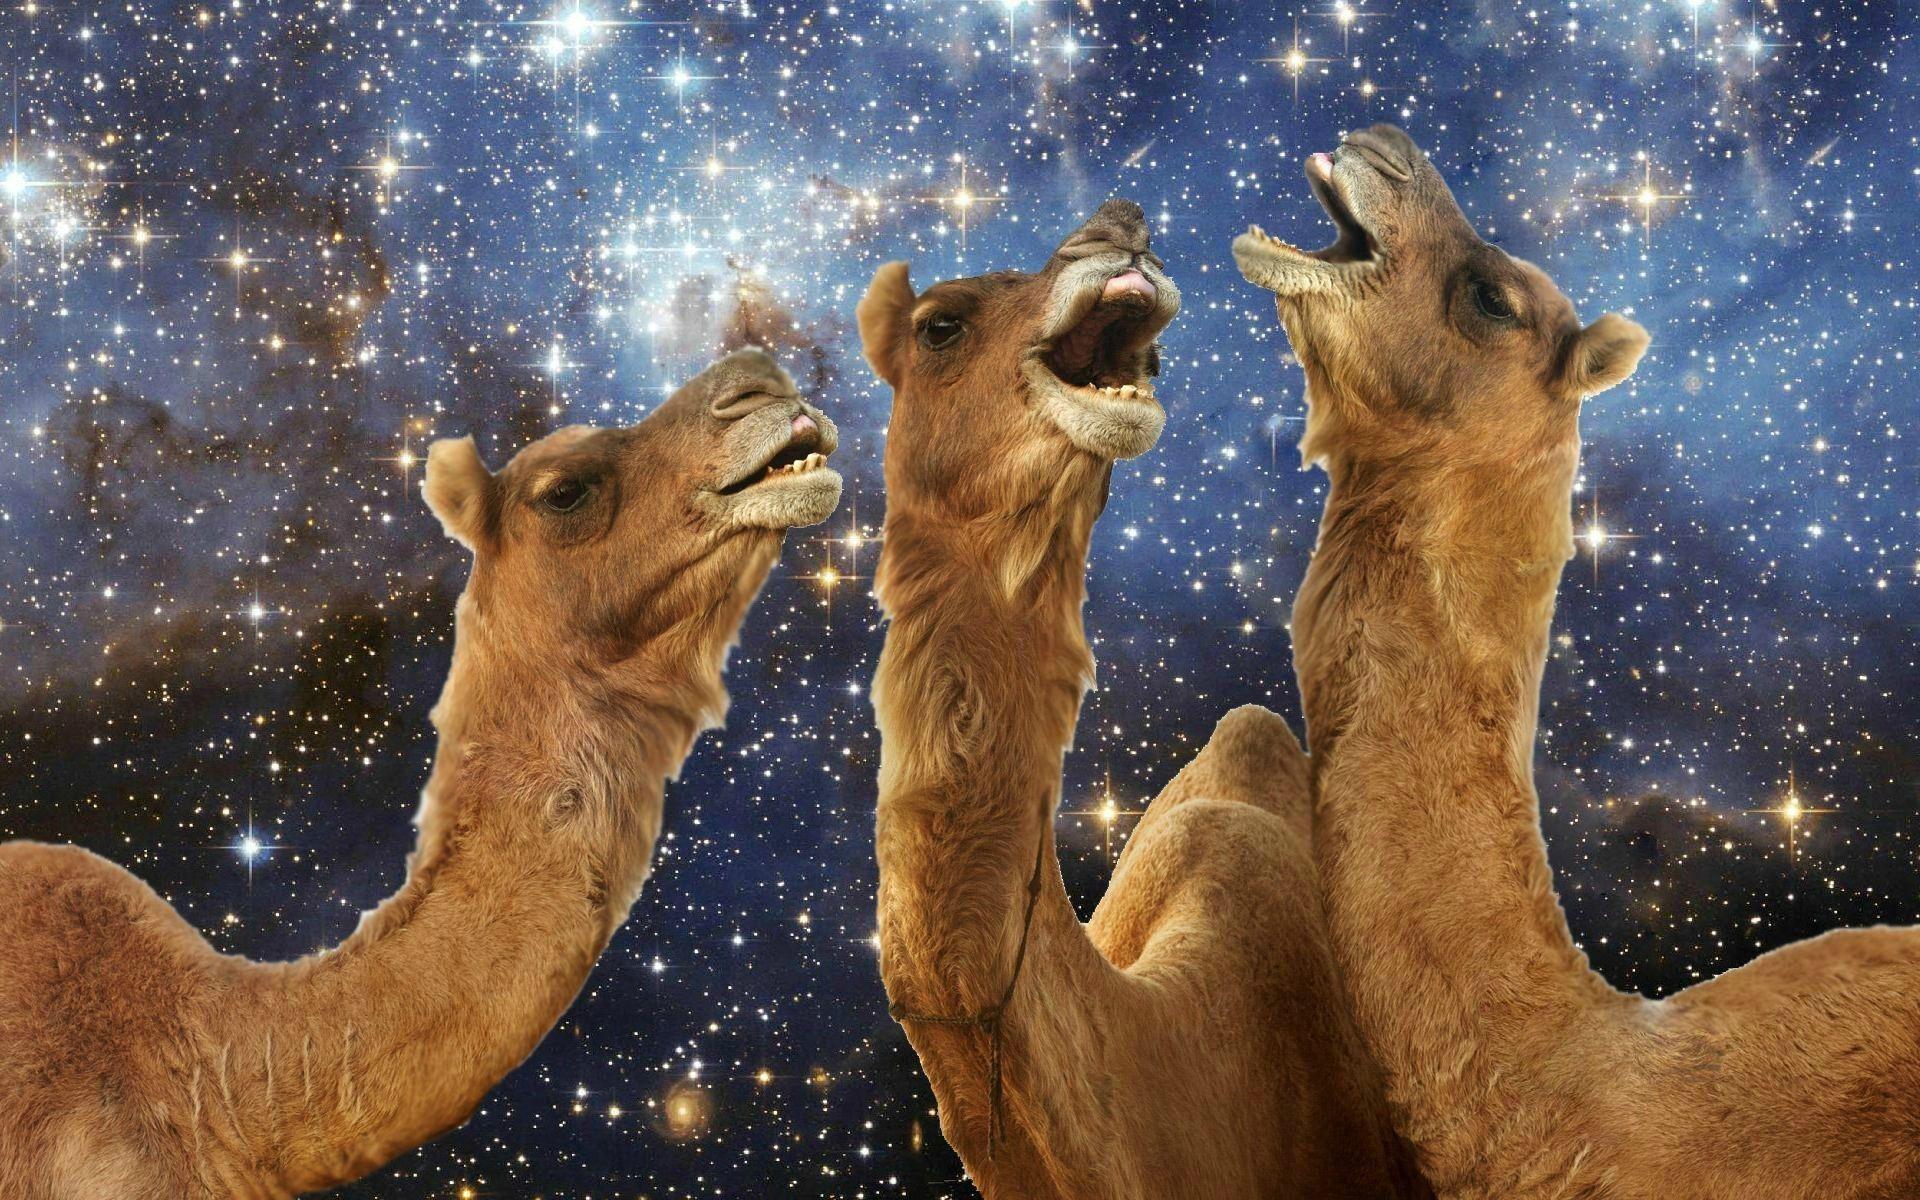 Llama laughing wallpaper. PC